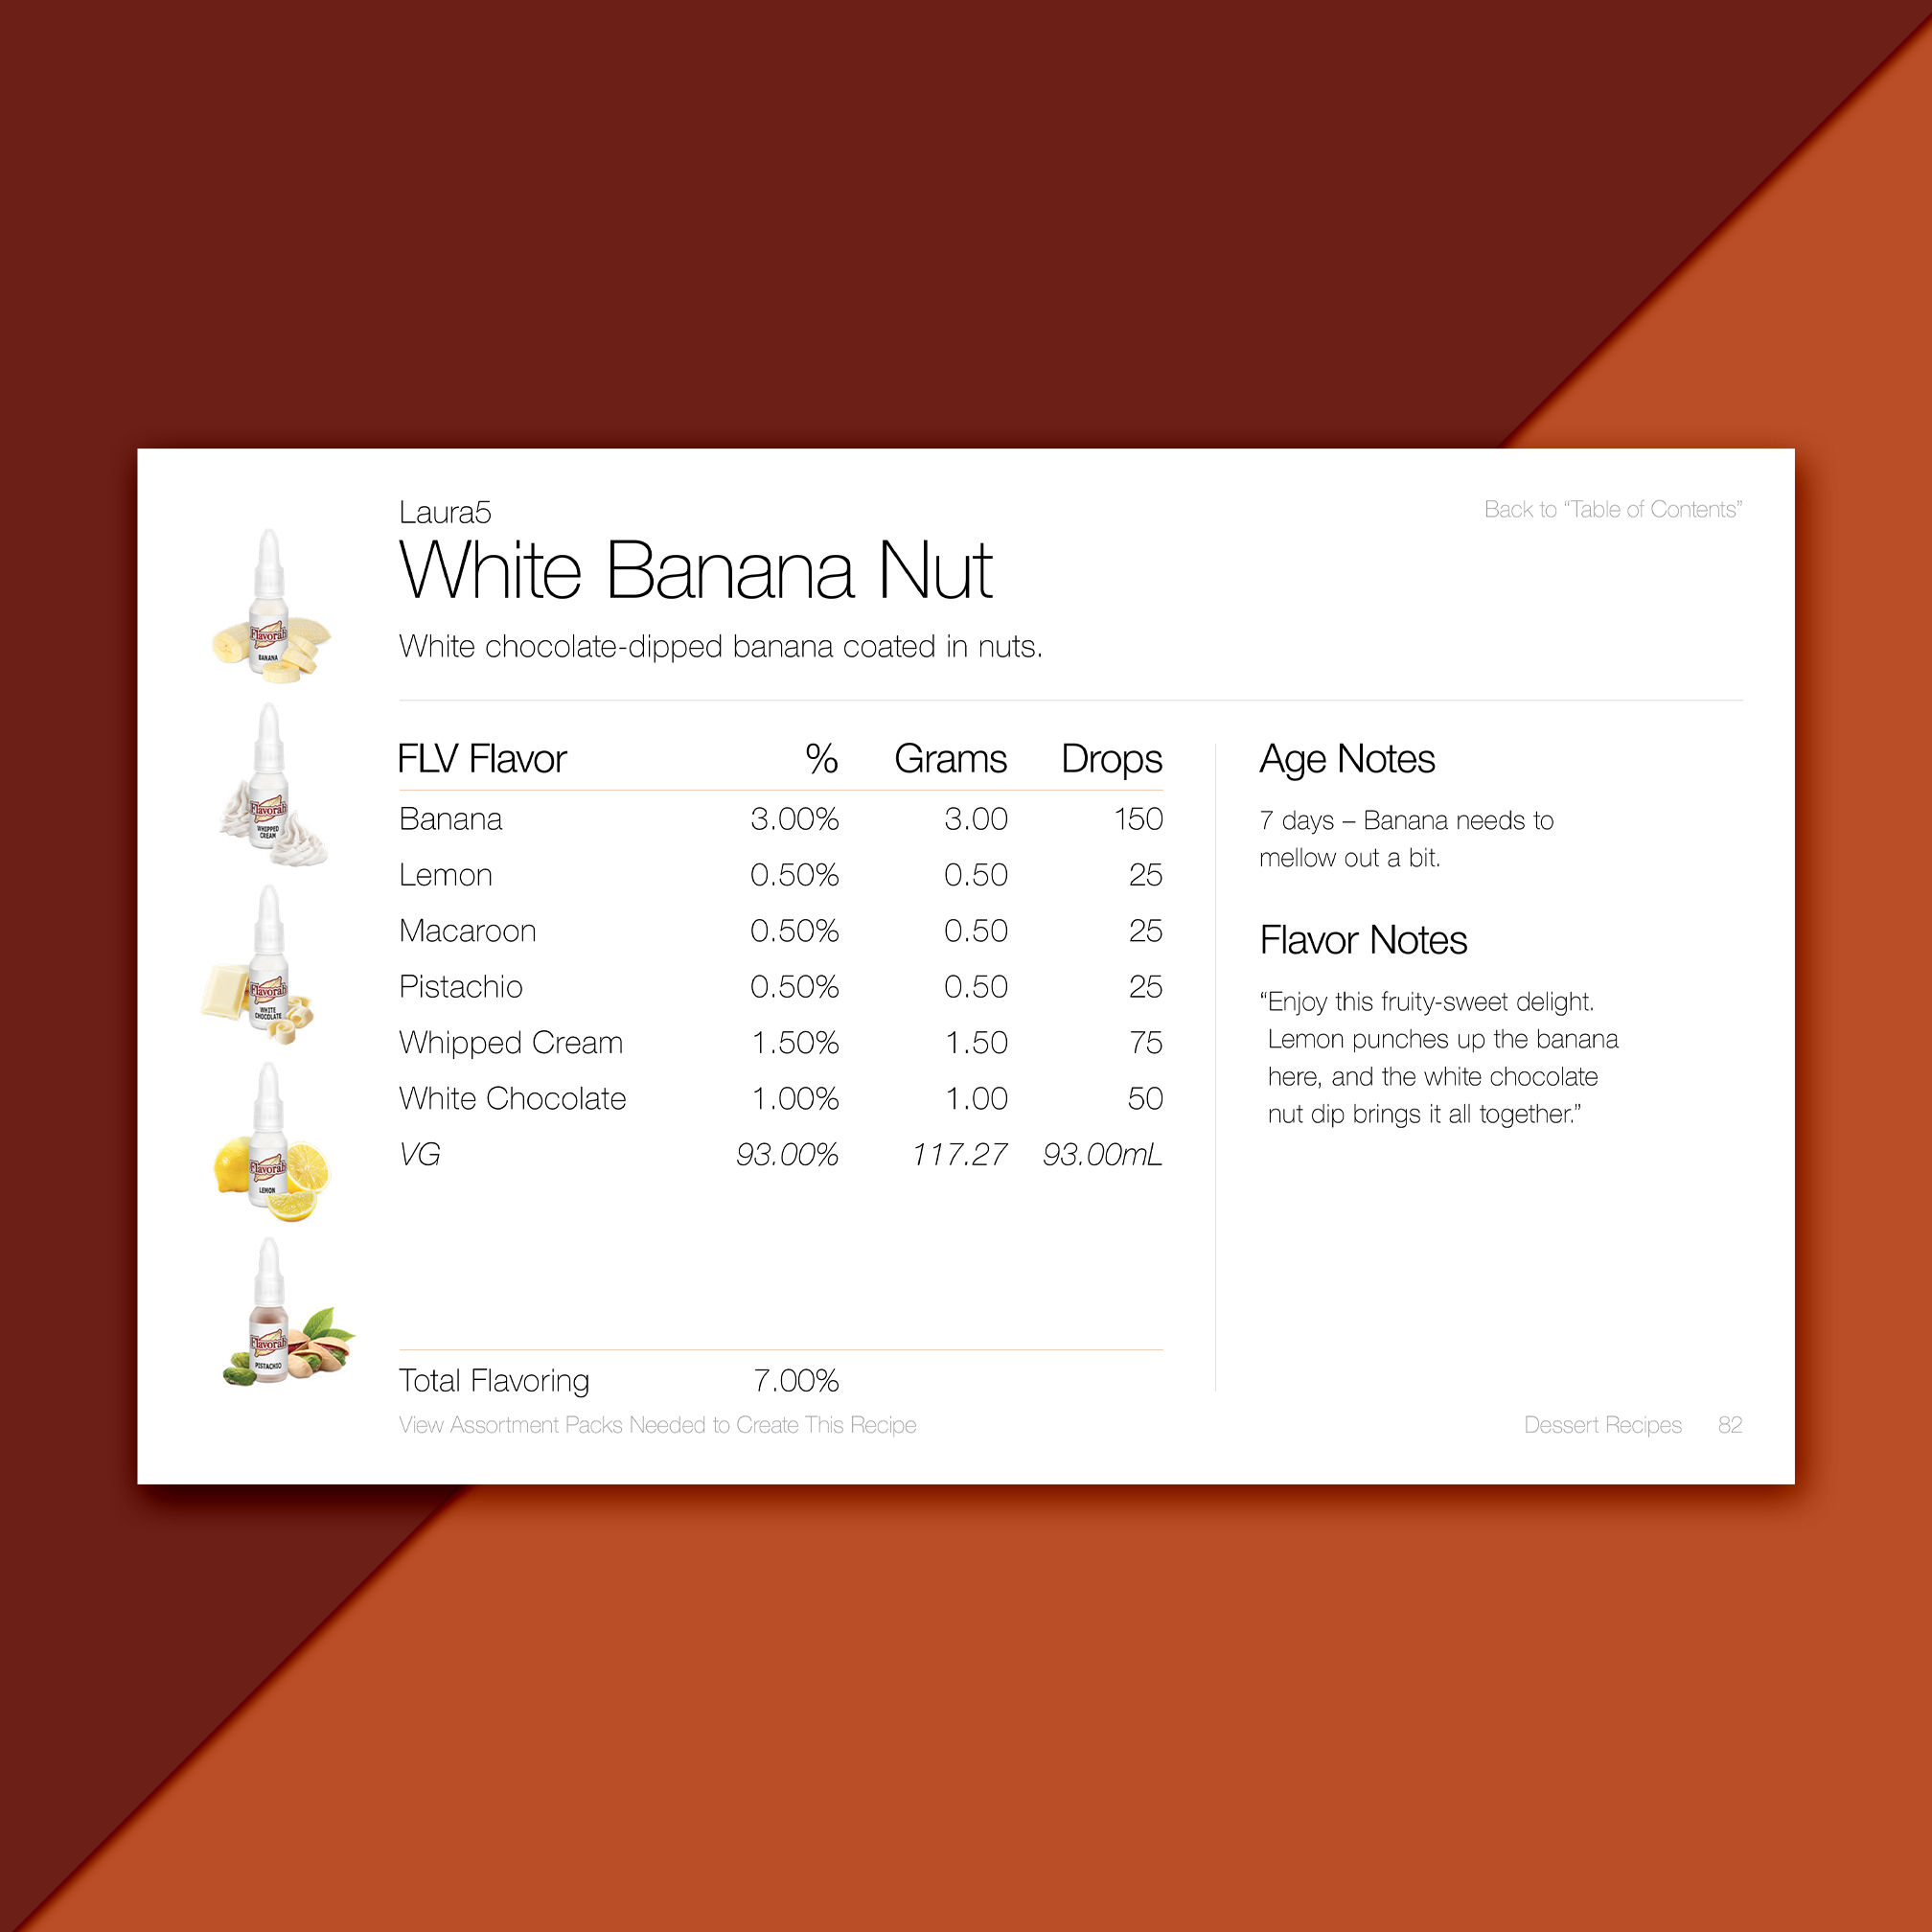 White Banana Nut by Laura5